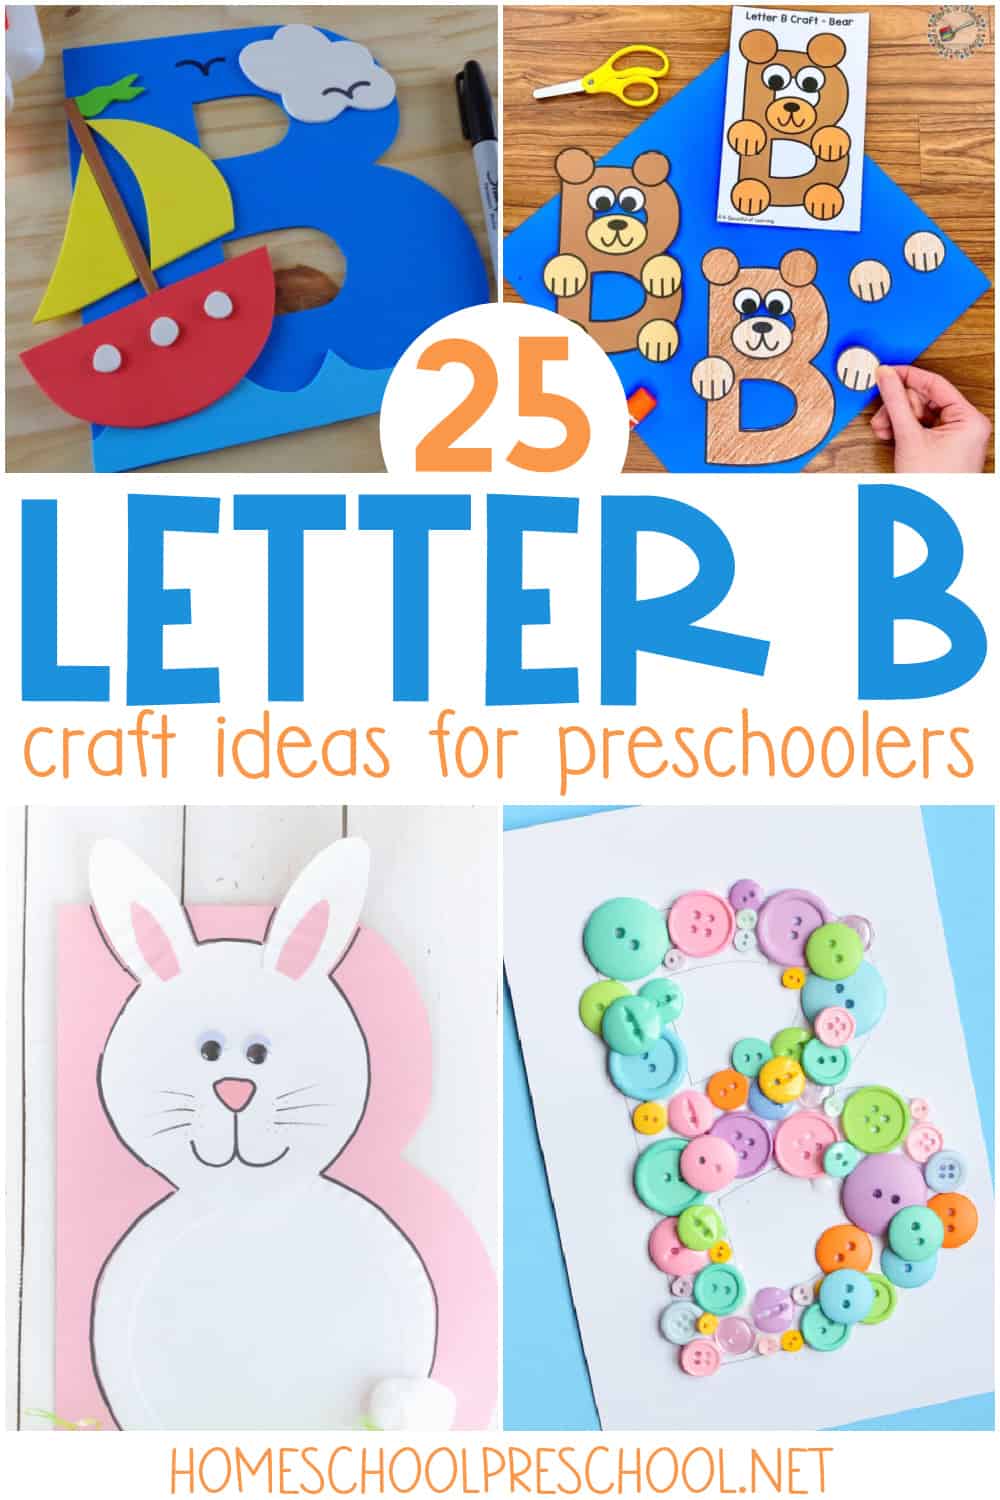 Letter B Crafts for Preschoolers